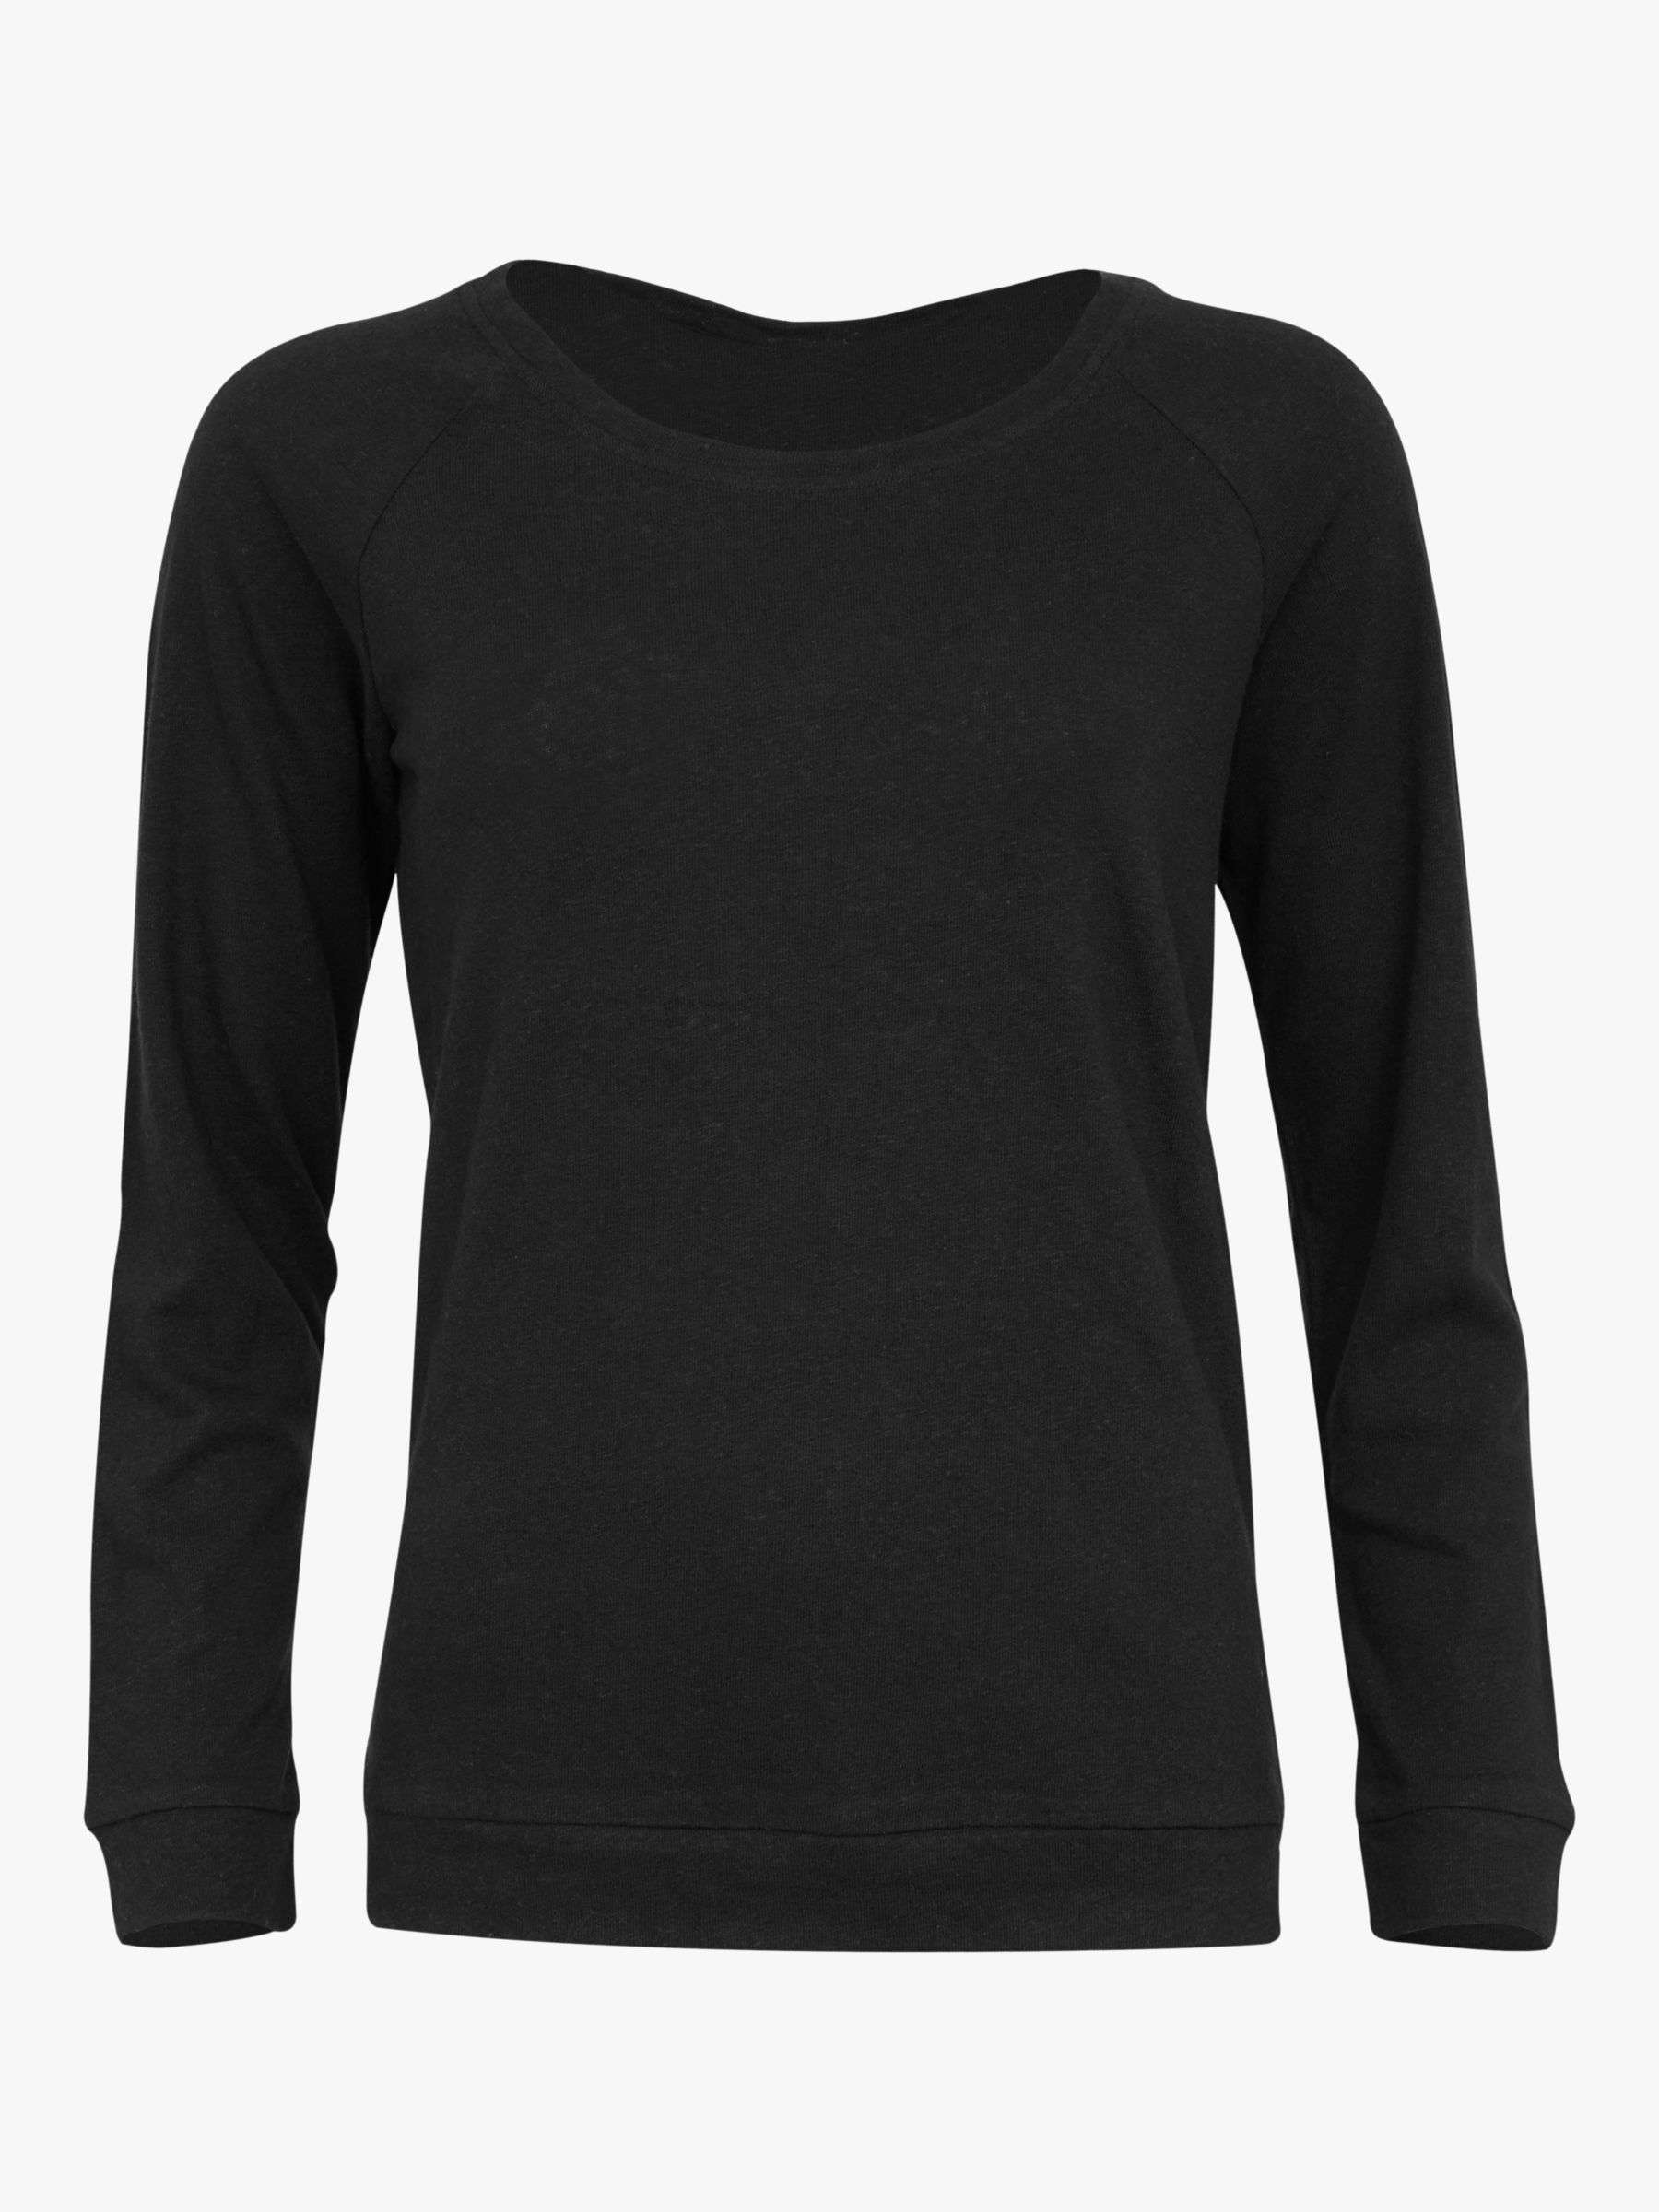 Celtic & Co. Linen Sweatshirt, Black, 8